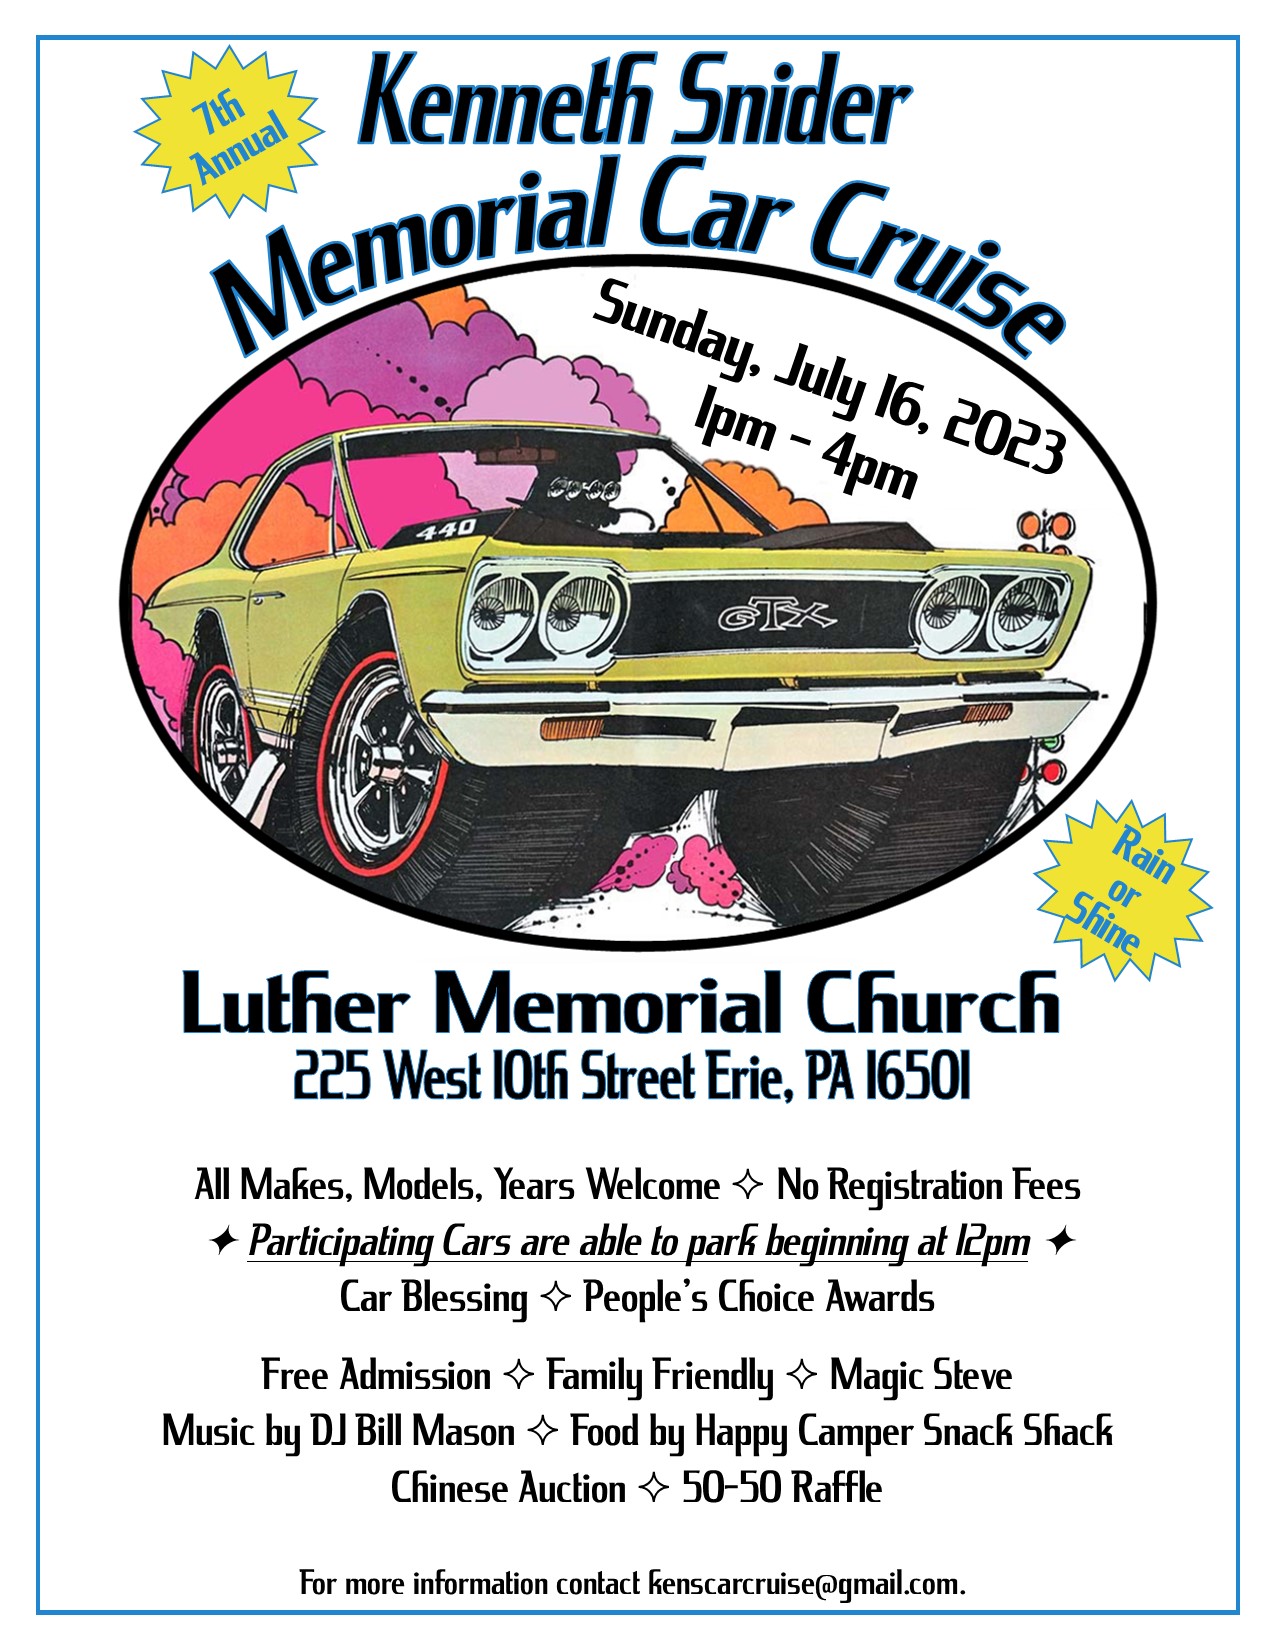 Kenneth Snider Memorial Car Cruise